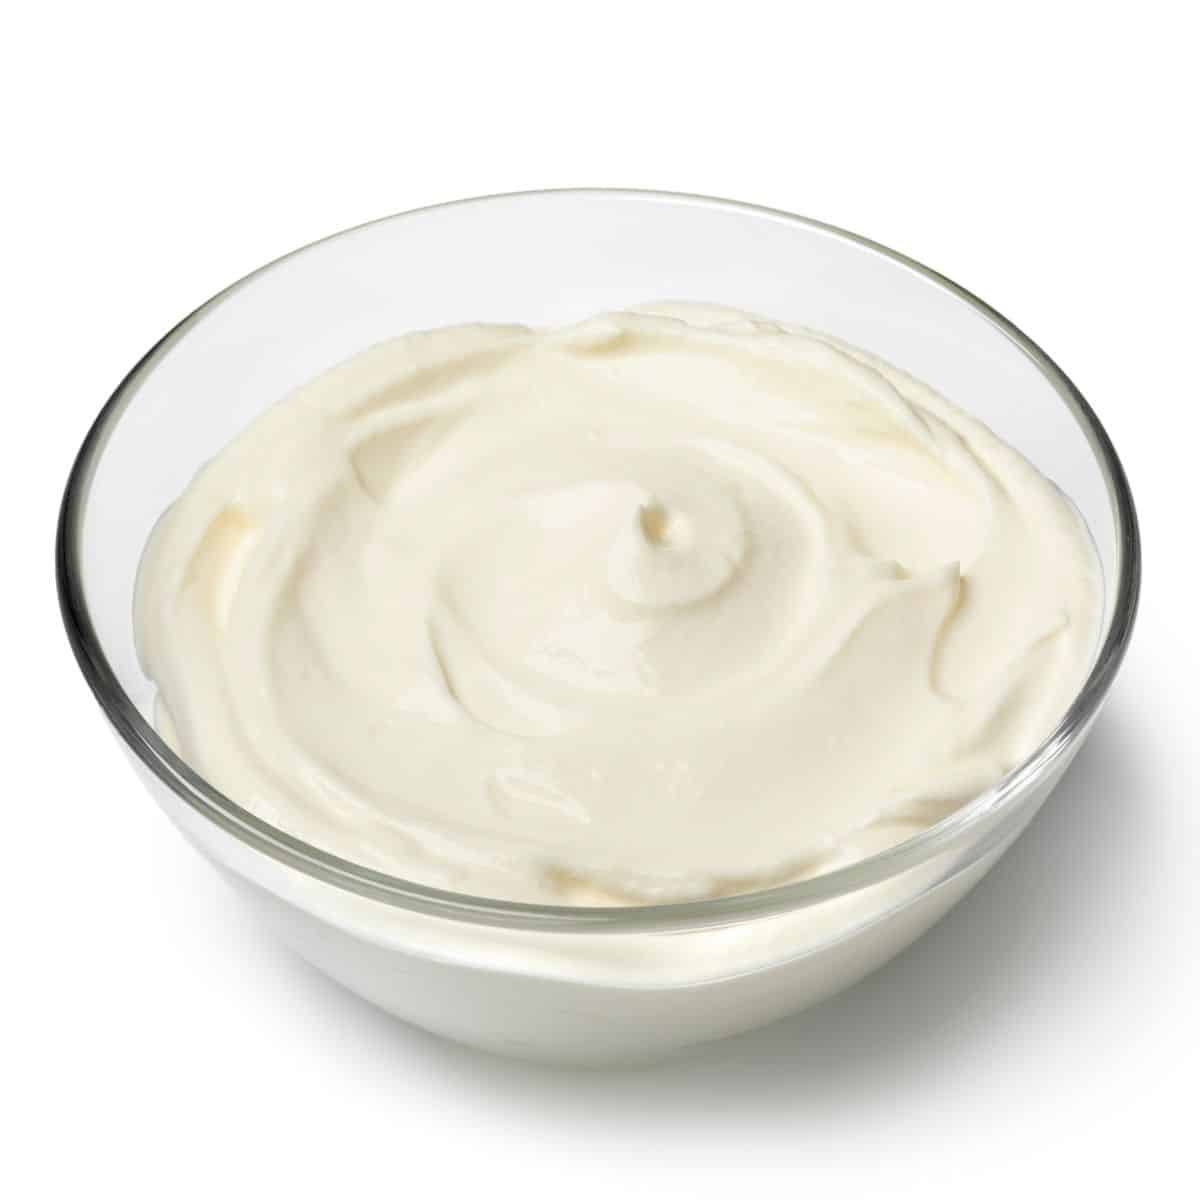 Creme fraiche in a bowl on a white background.